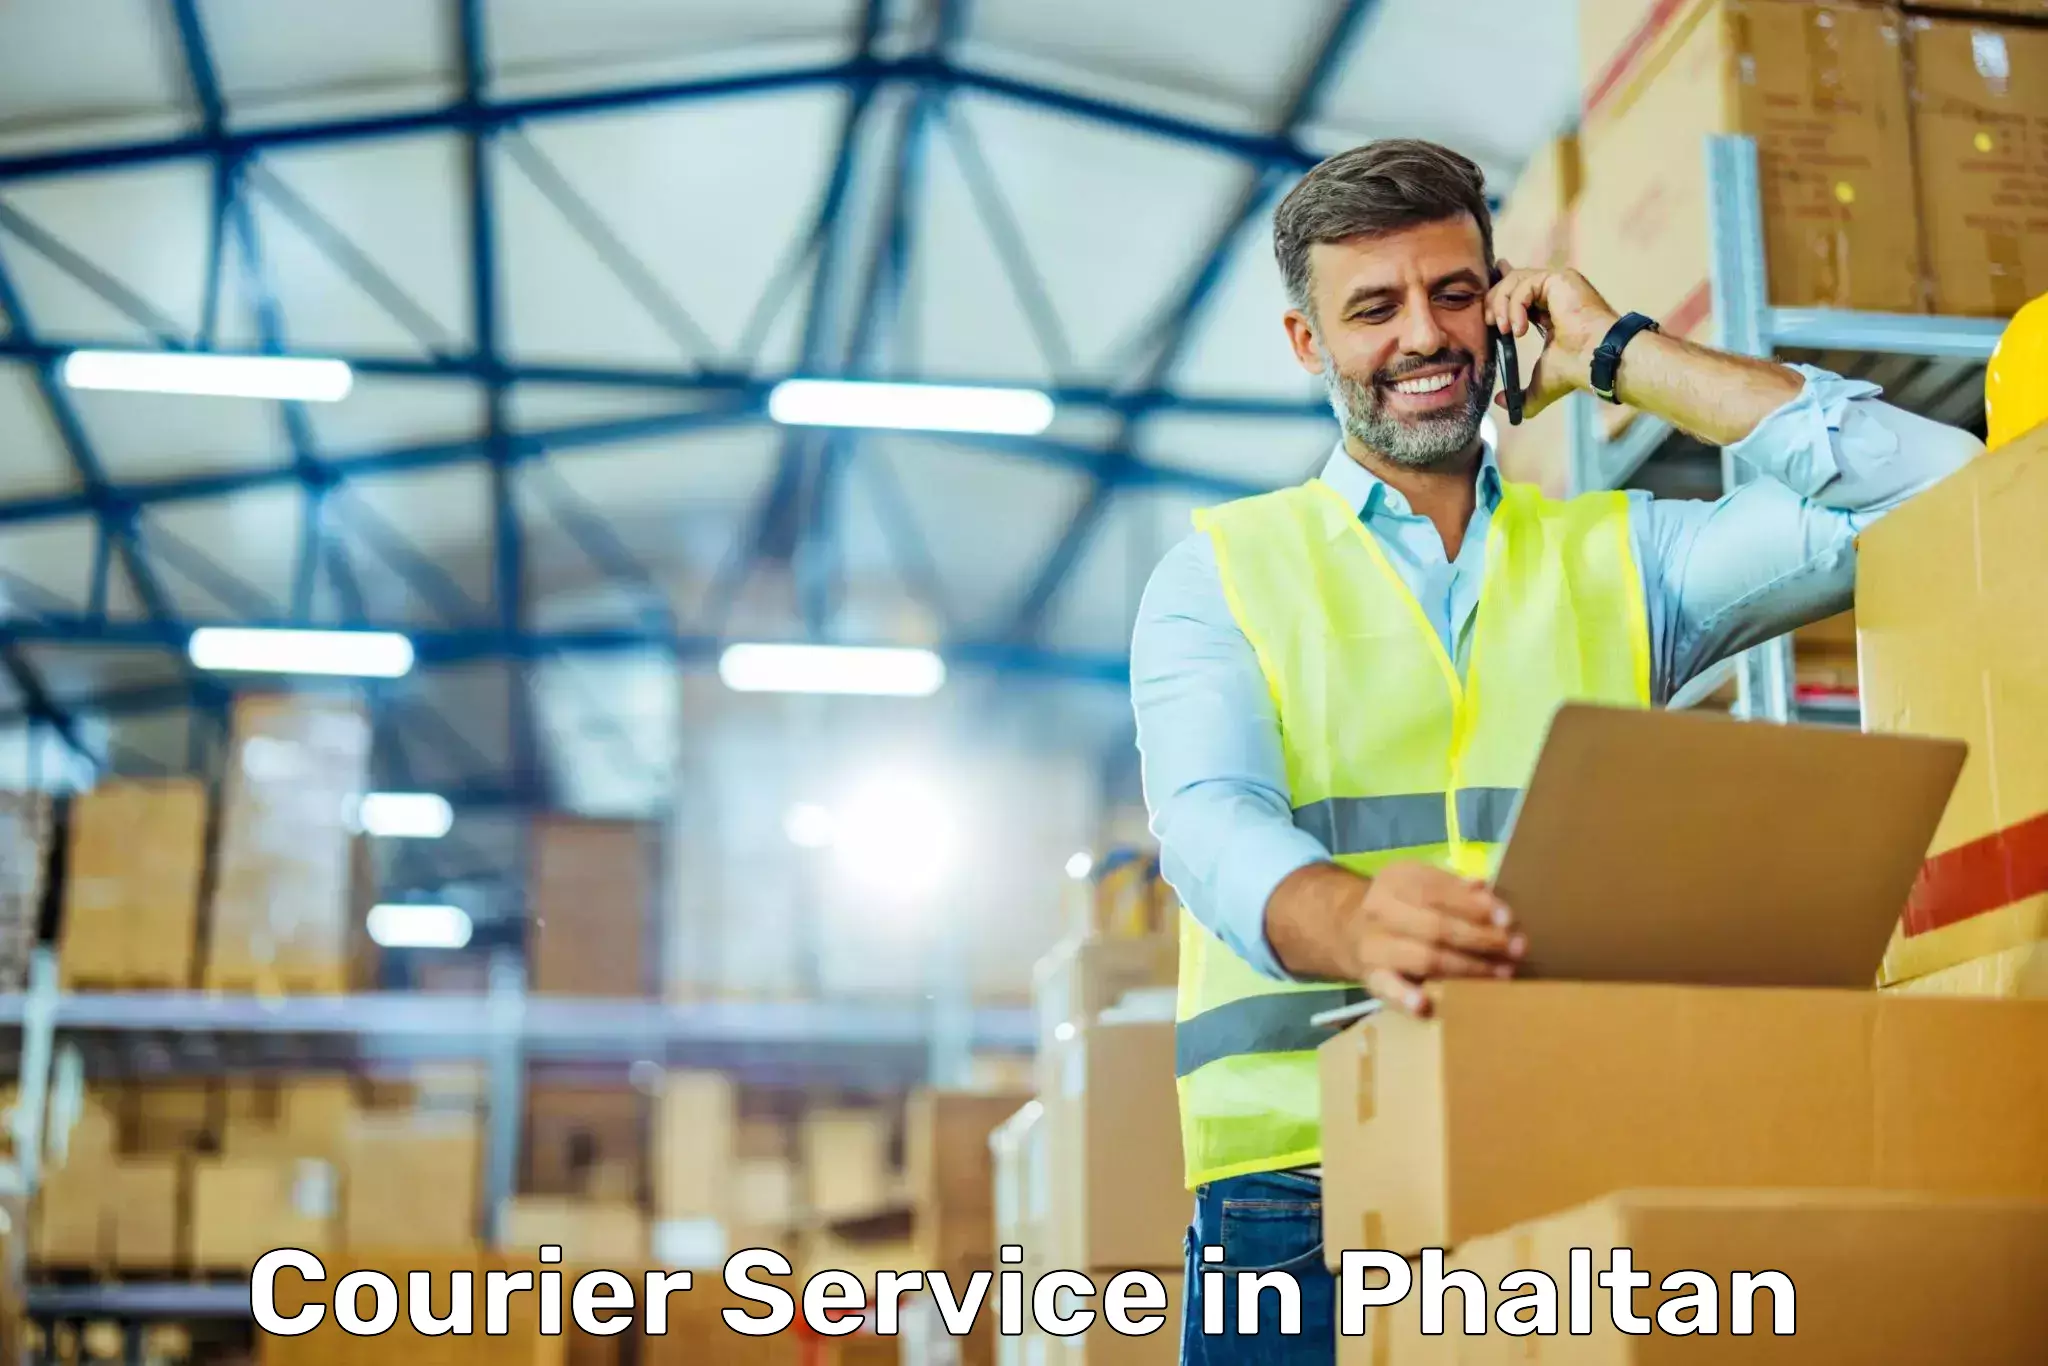 Courier service efficiency in Phaltan